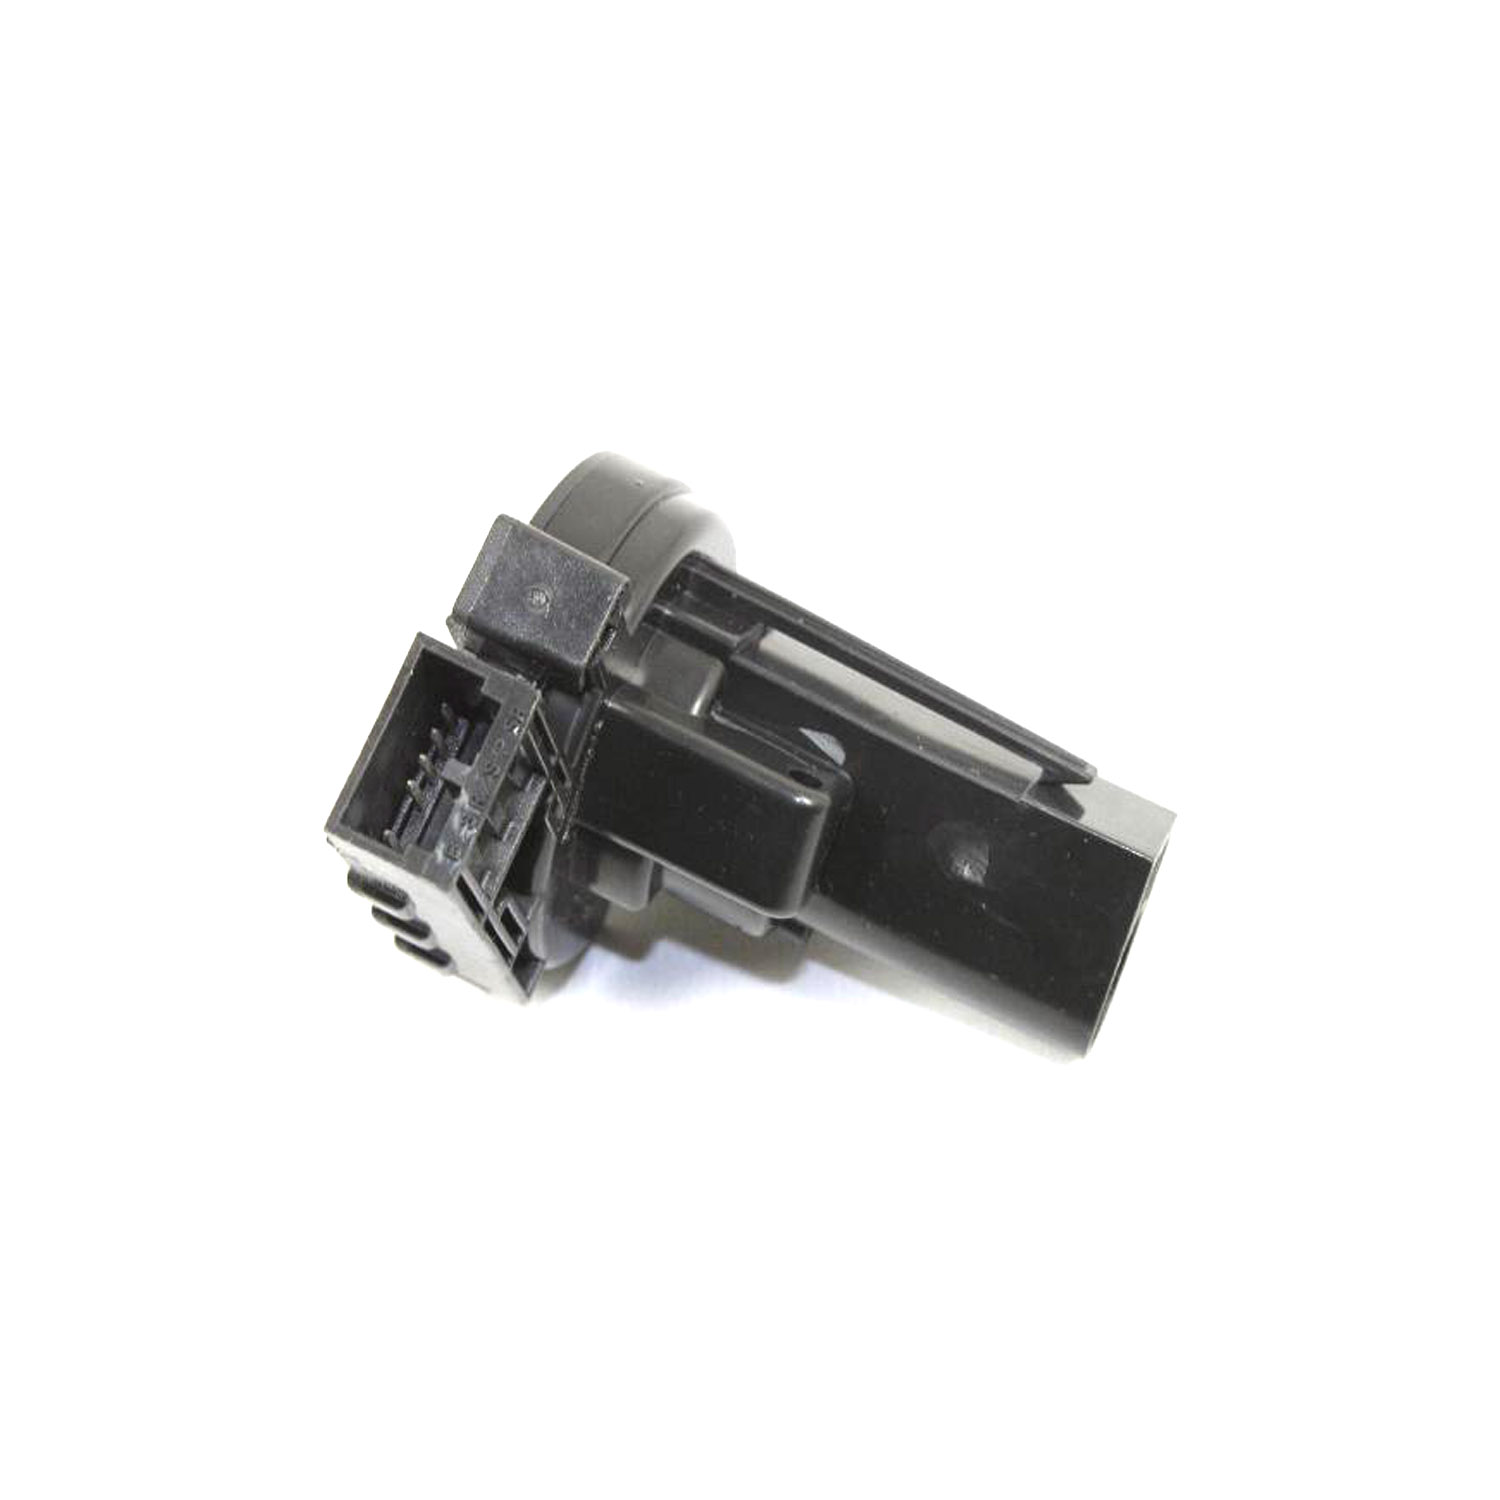 MOPAR BRAND - Ignition Switch Kit - MPB 56049838AC